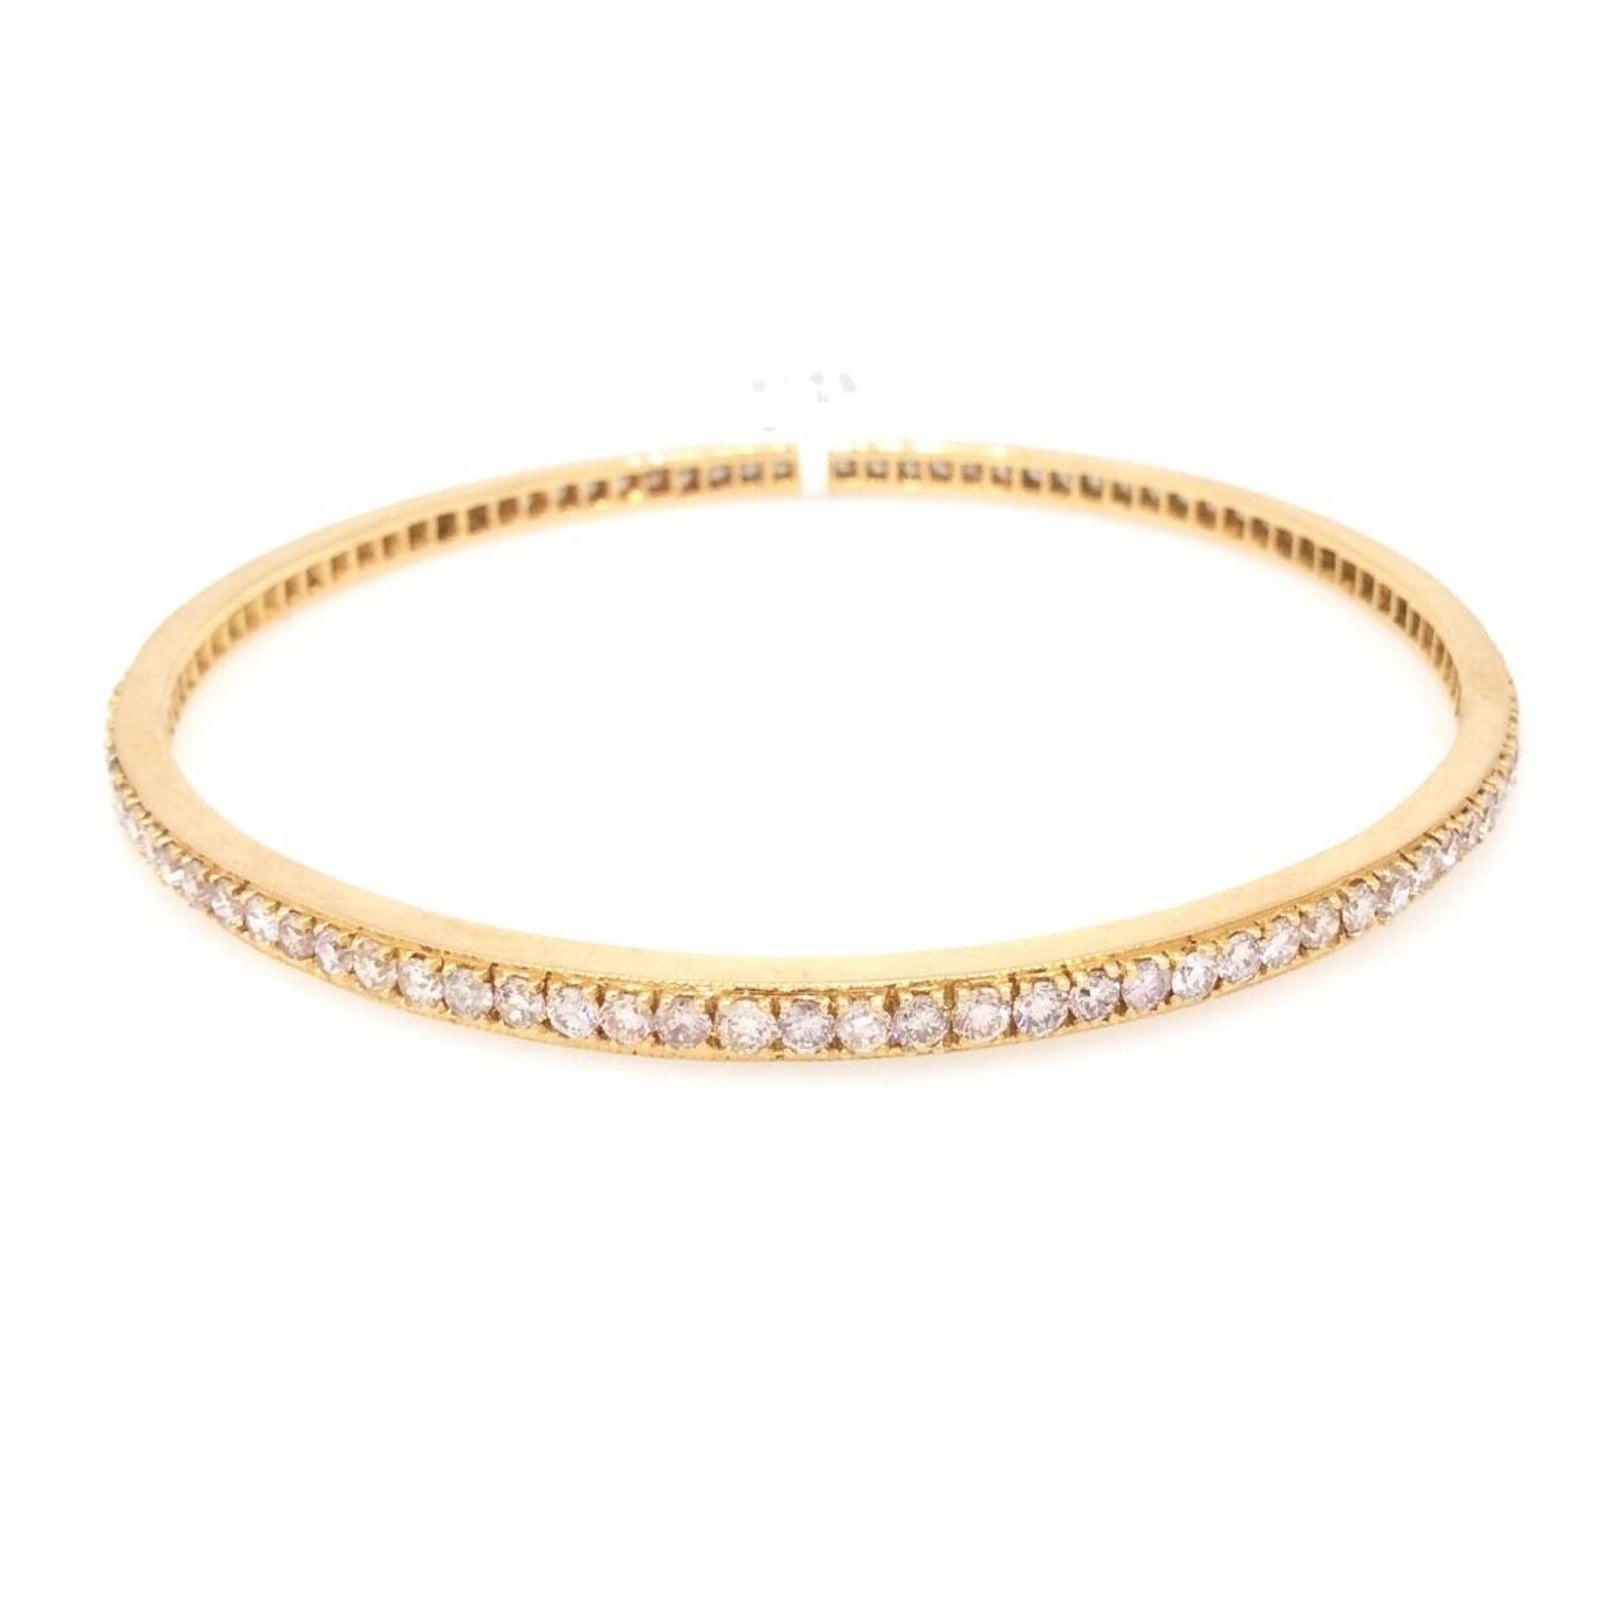 4.80 cts Single Row Diamond Bangle Bracelet in 18k Rose Gold